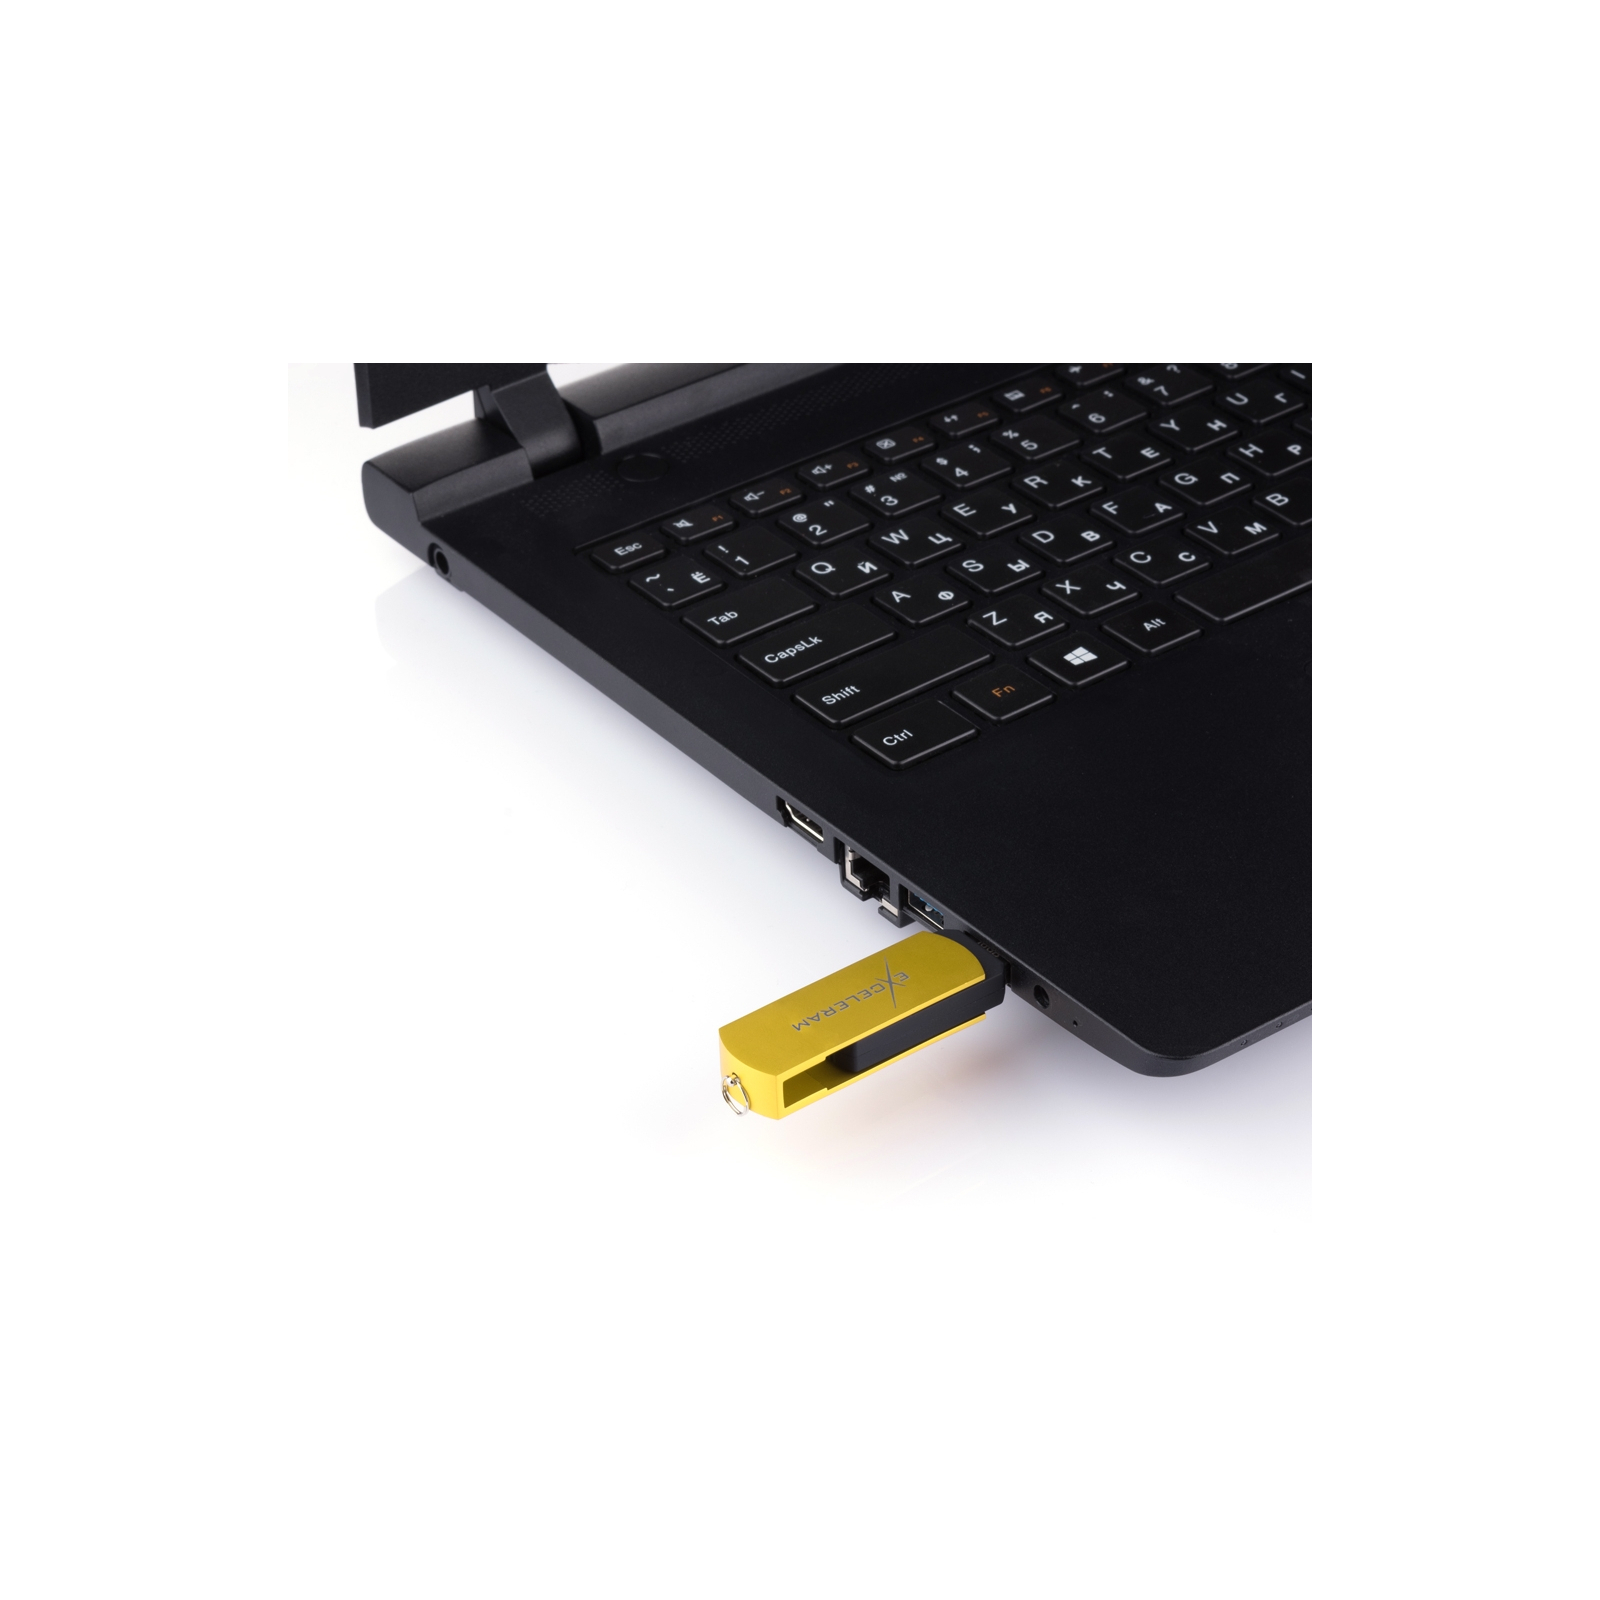 USB флеш накопитель eXceleram 128GB P2 Series Gray/Black USB 3.1 Gen 1 (EXP2U3GB128) изображение 7